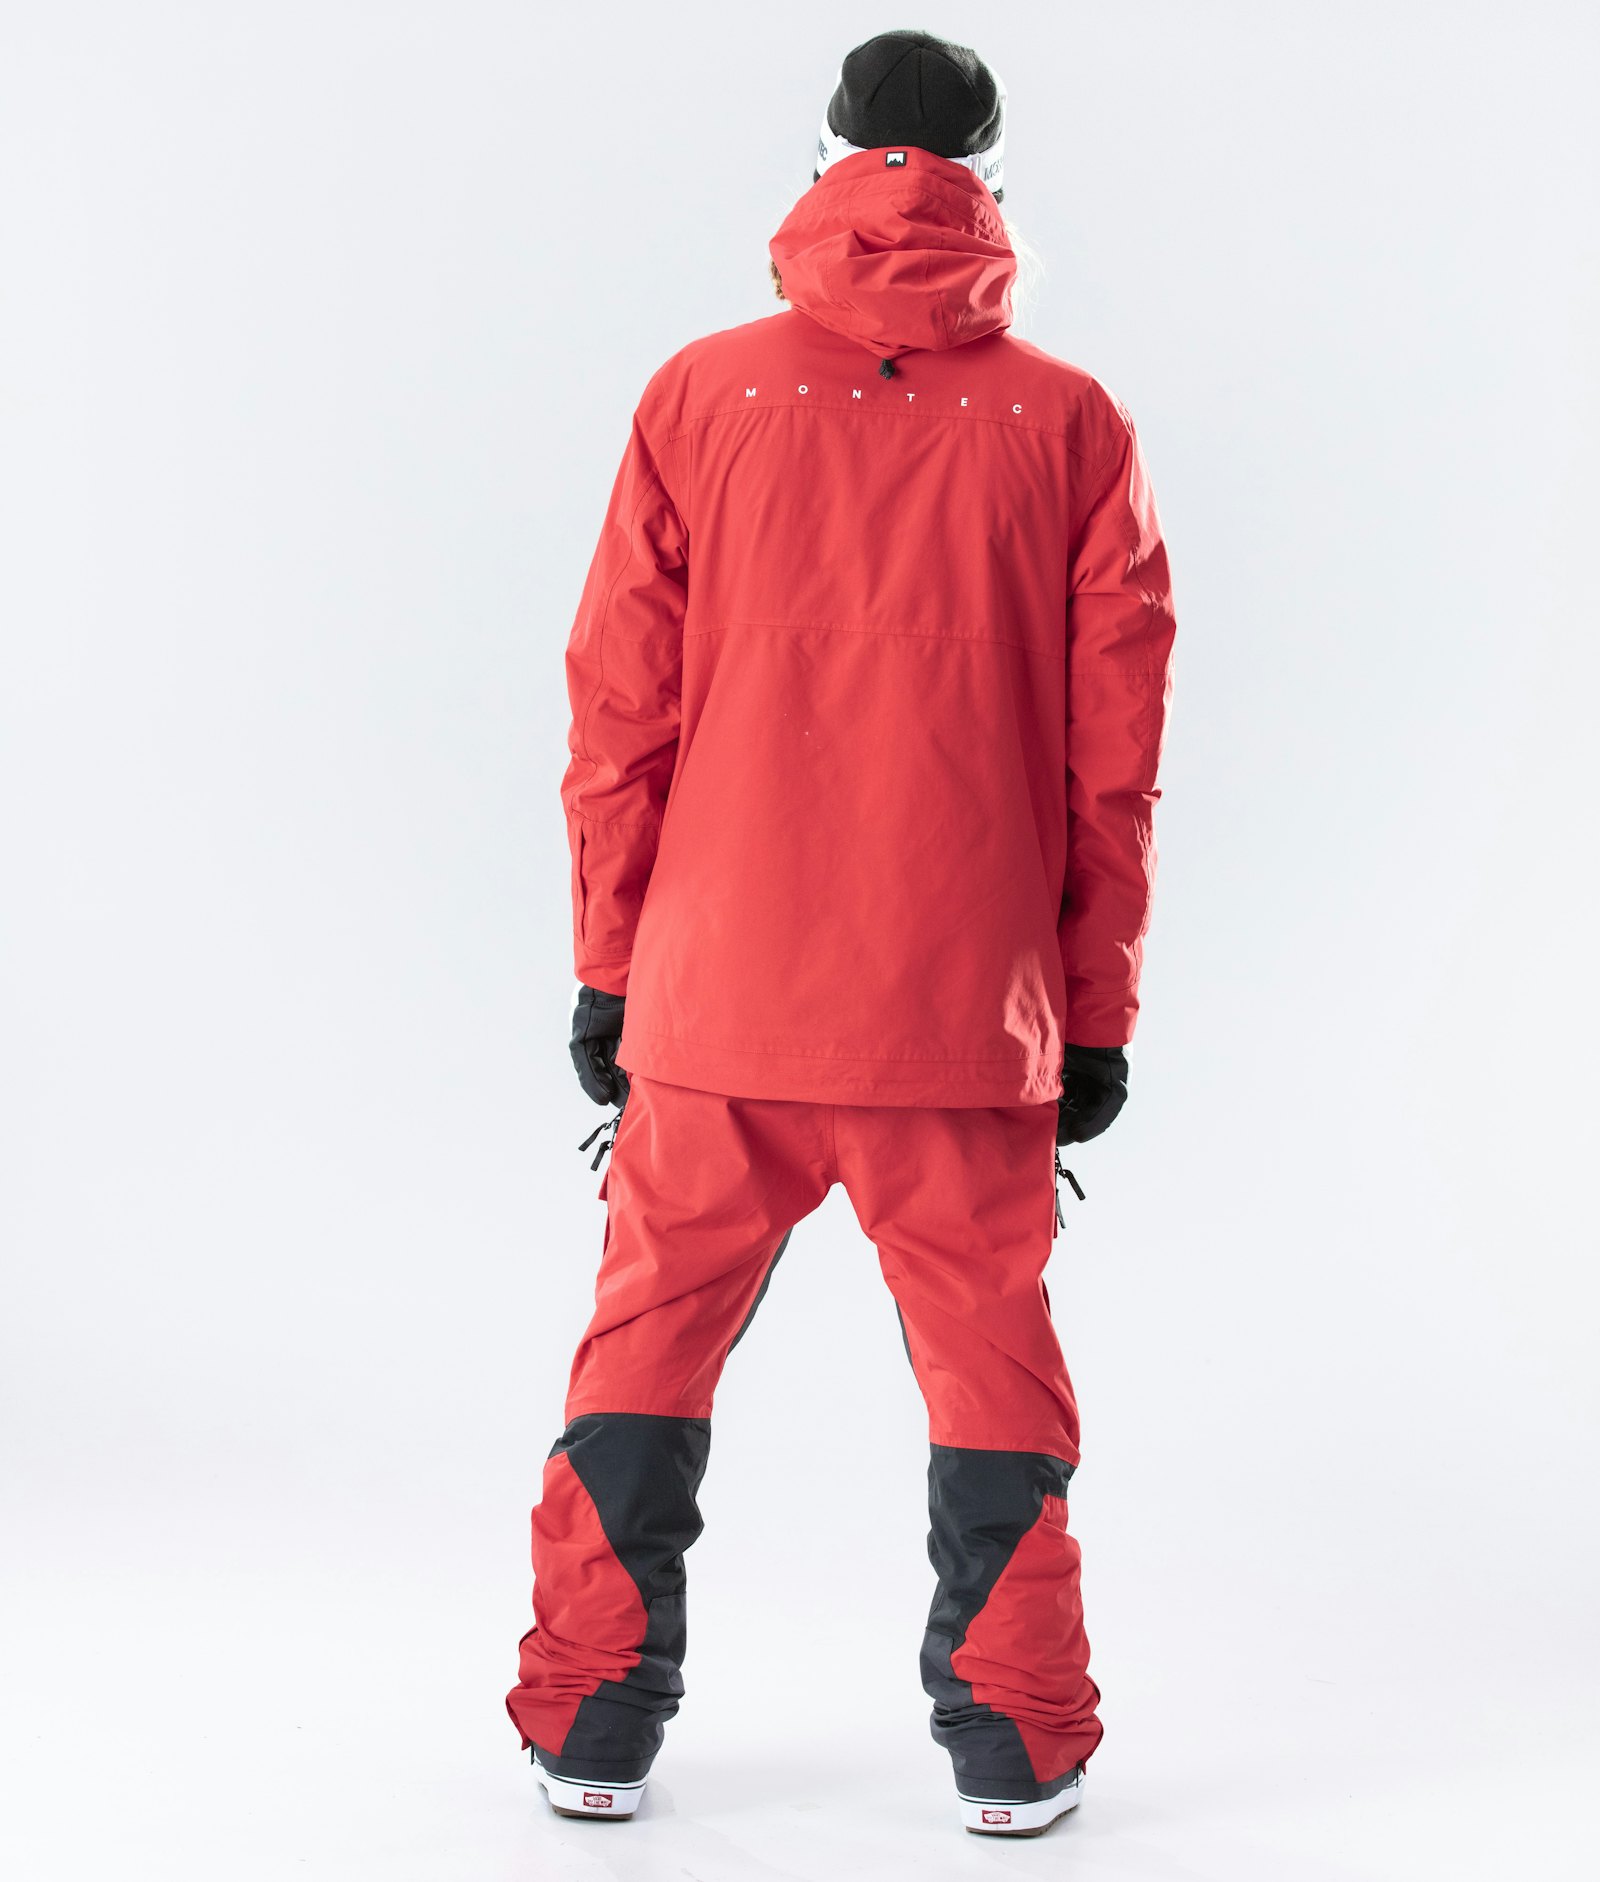 Doom 2020 Veste Snowboard Homme Red